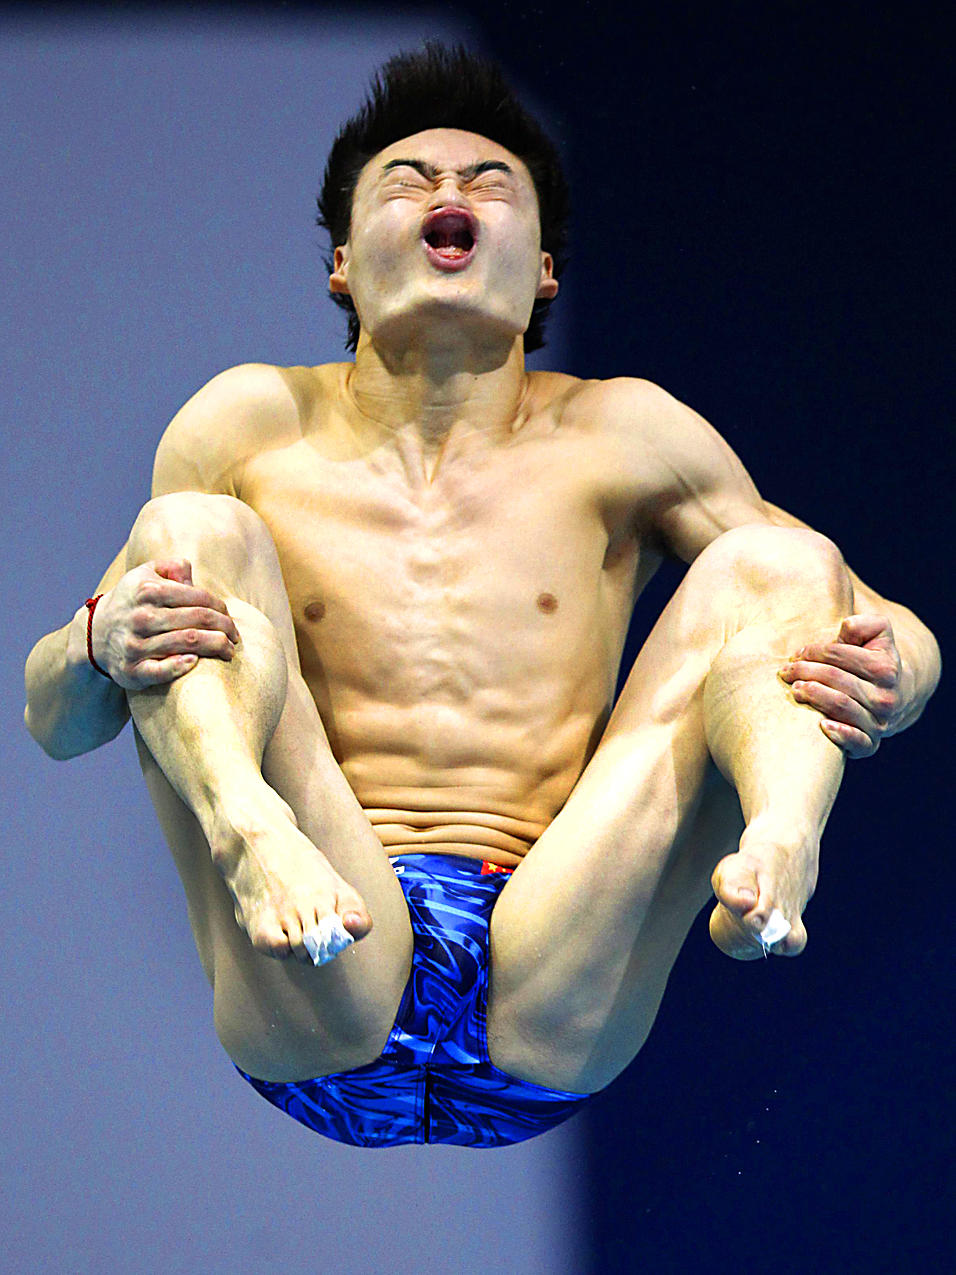 http://sportanalytic.com/uploads/images/default/kvin-kai-na-ks-zys-tribkyv-u-vodu.jpg